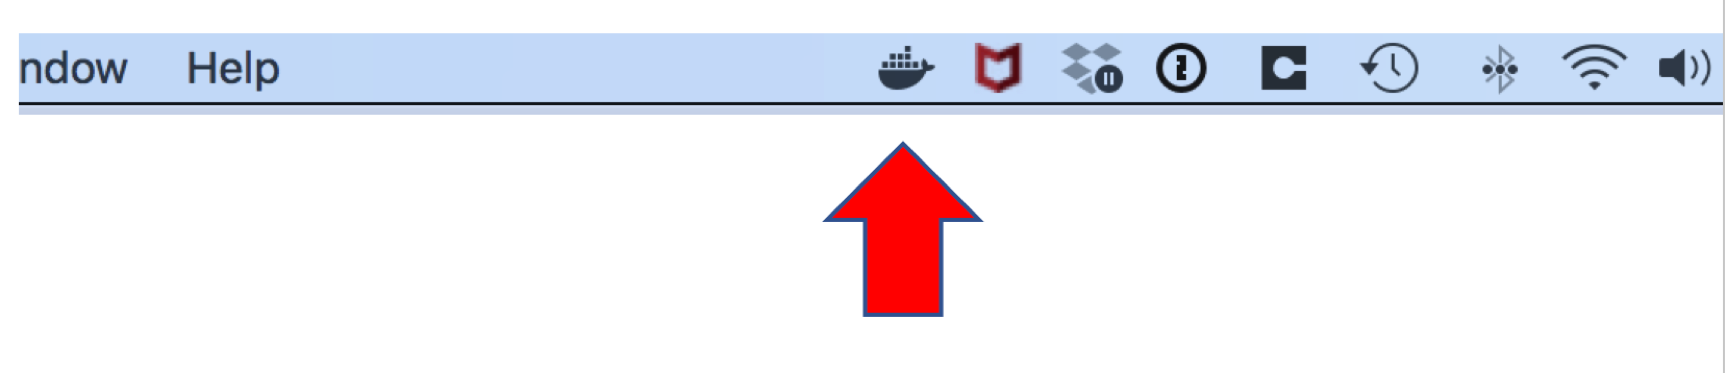 Docker icon in status bar